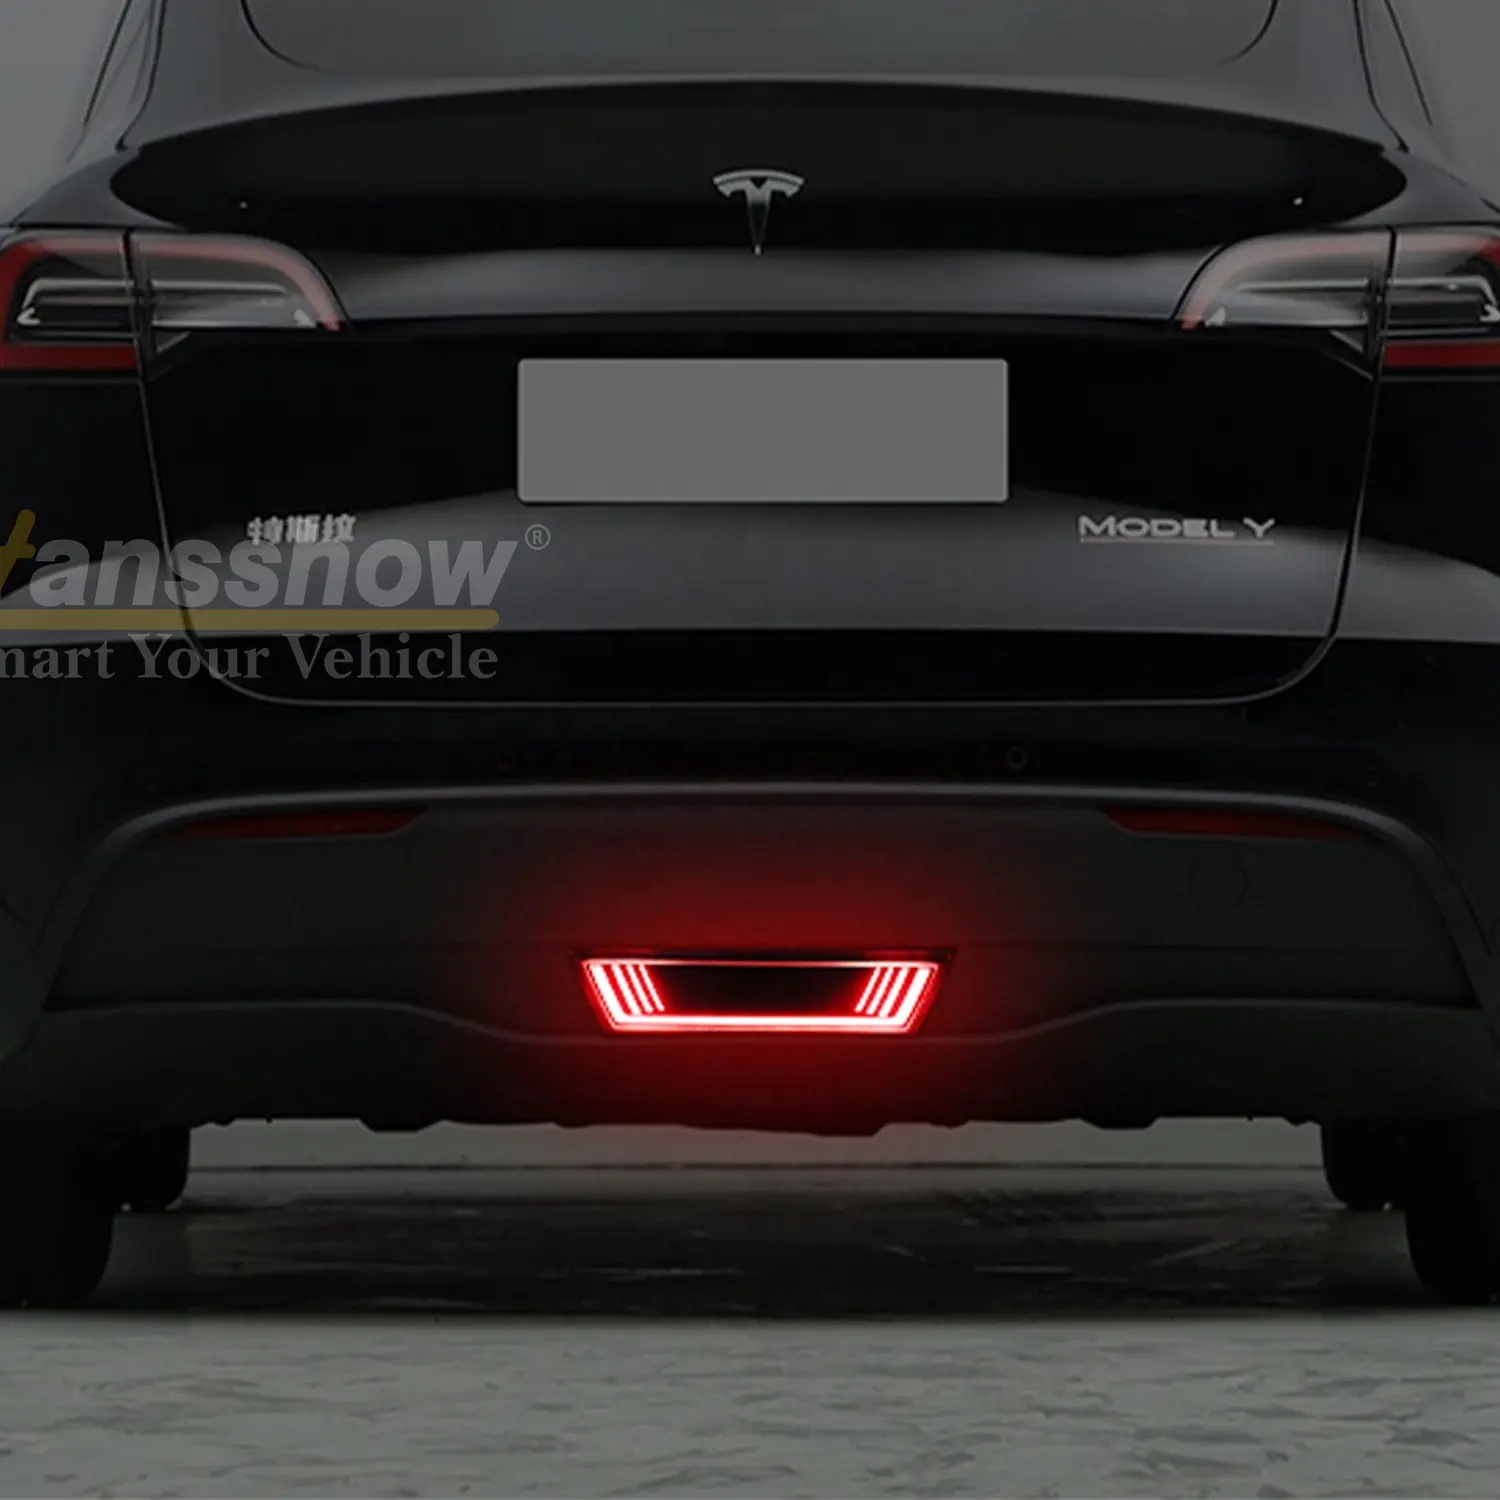 Hansshow Model Y Anti-collision Pilot Light For Tesla Model Y Tail Light 2017-2023